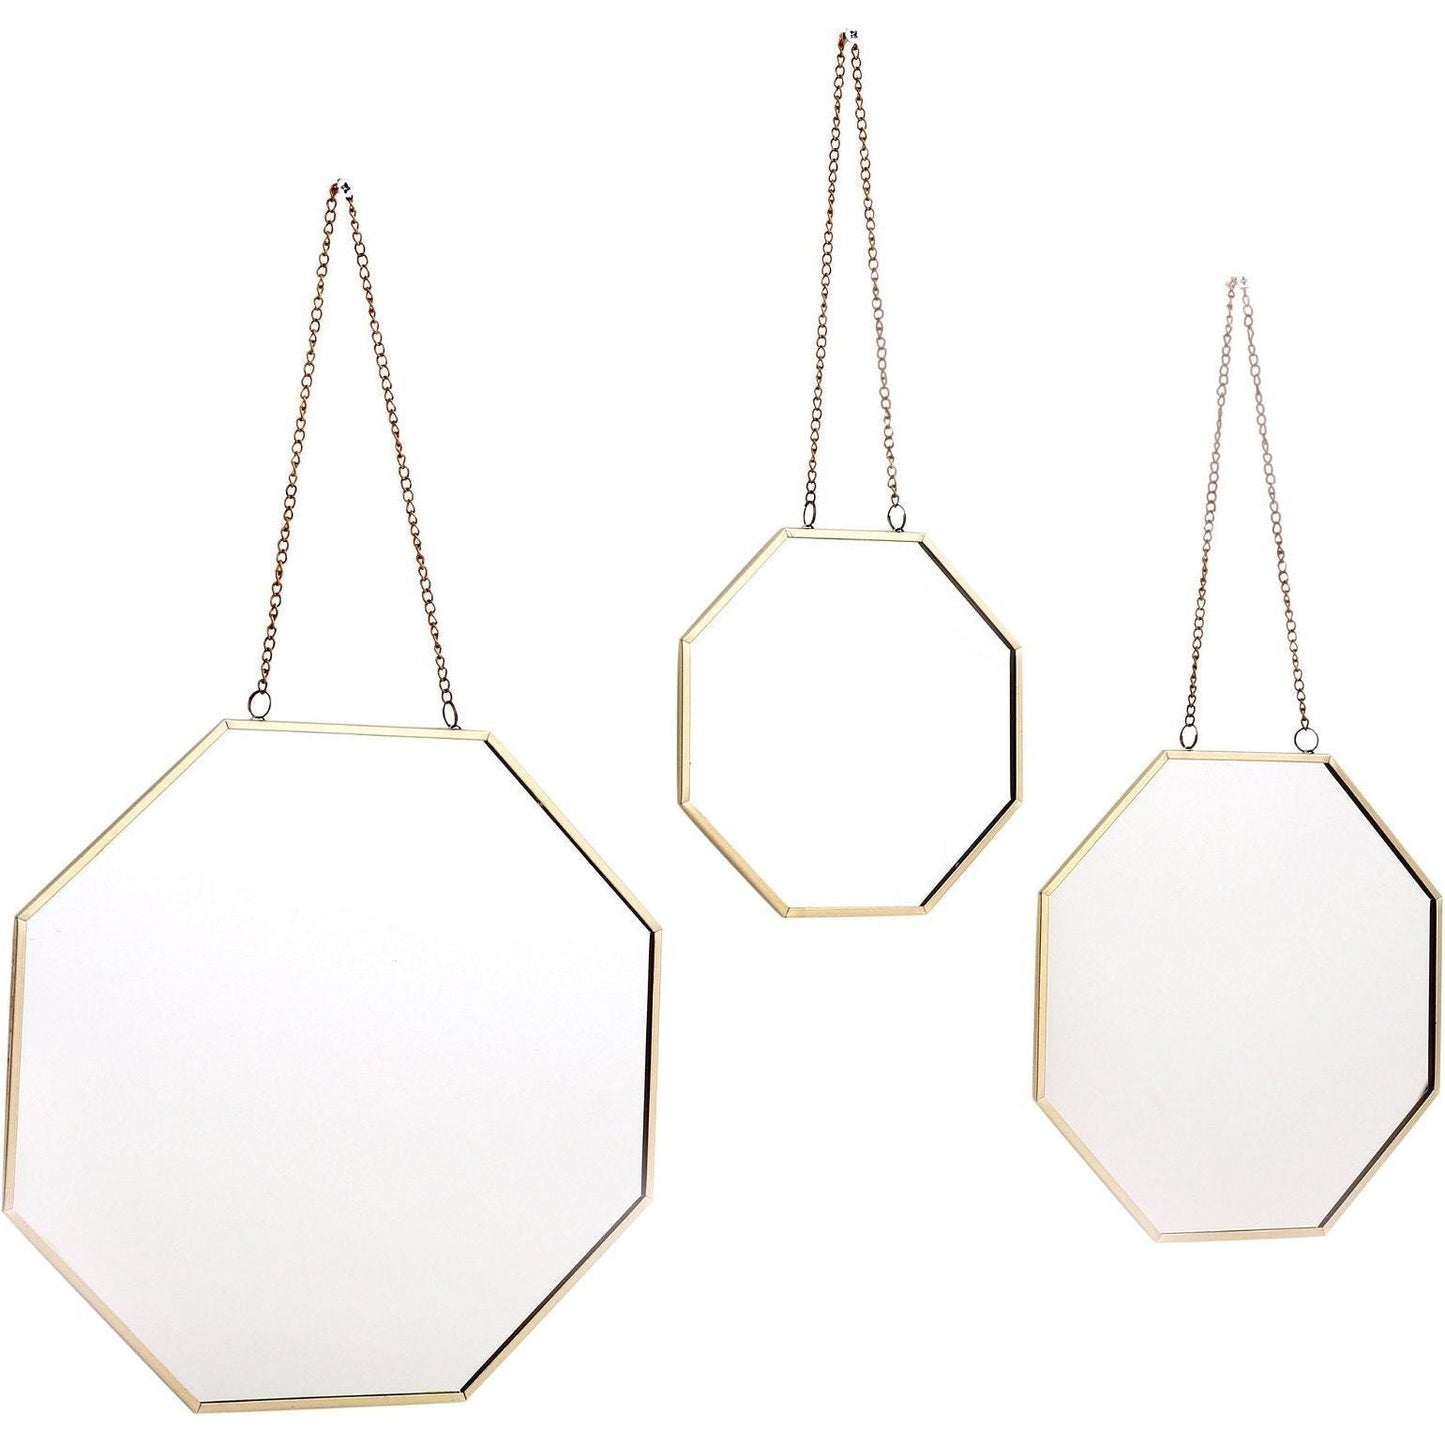 Set of 3 Hanging Geometric Mirrors - Ashton and Finch